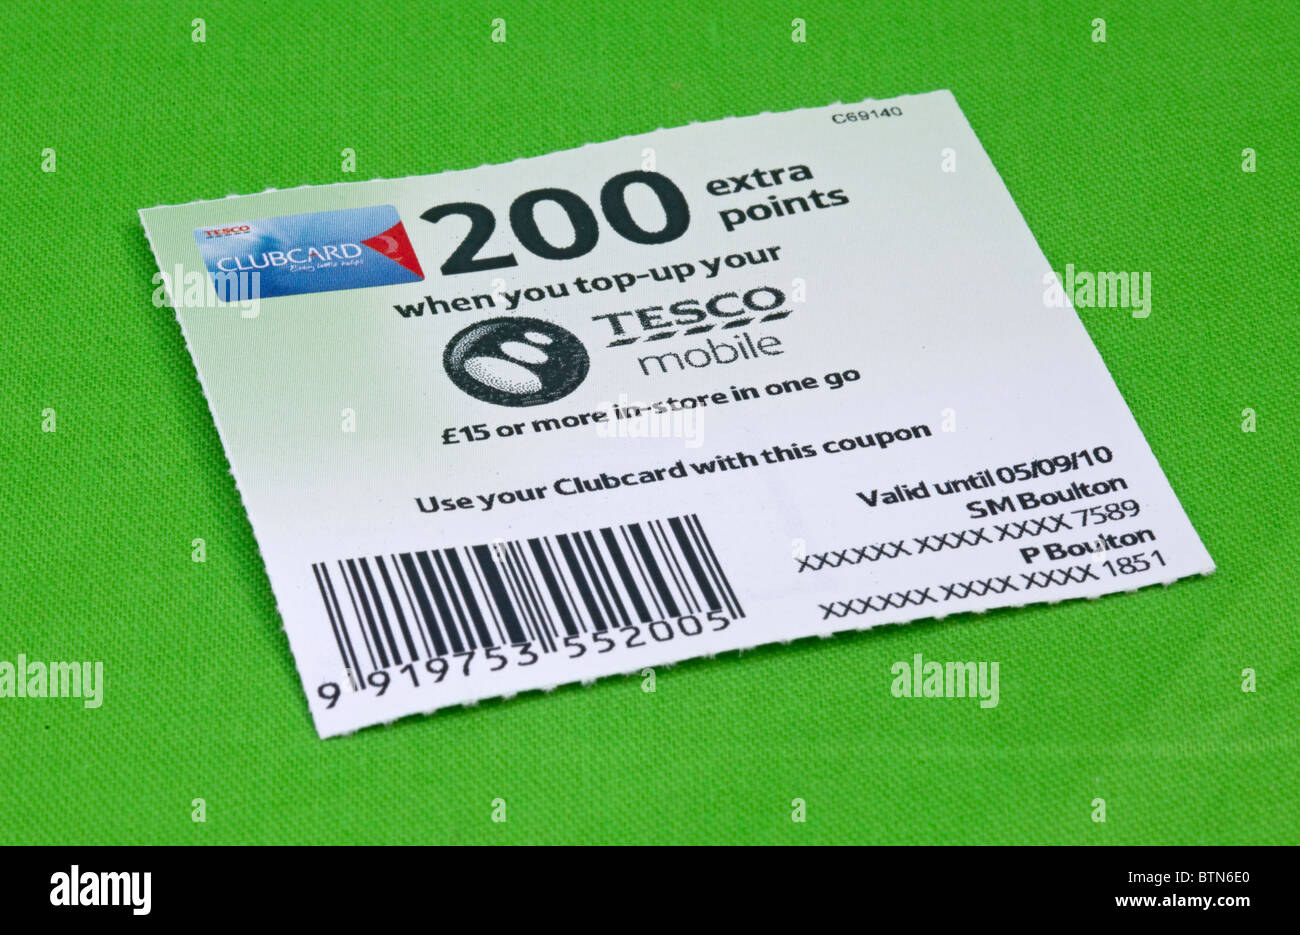 Tesco points coupon 200 extra points clubcard UK Stock Photo